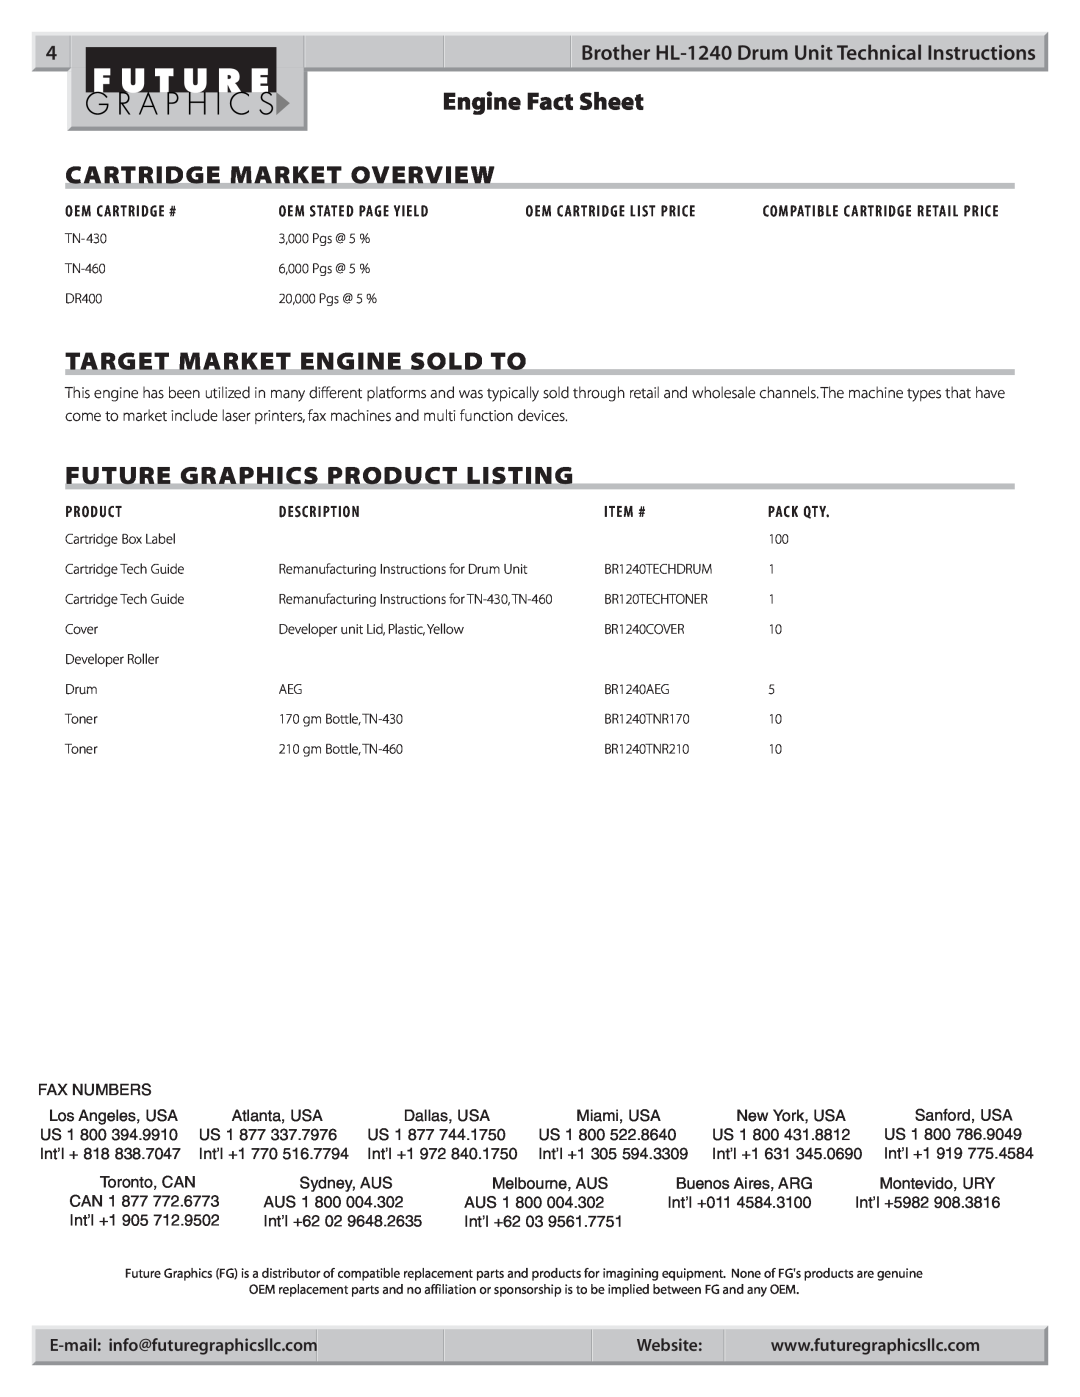 Brother HL-1240 manual Engine Fact Sheet, Cartridge Market Overview, Target Market Engine Sold To 